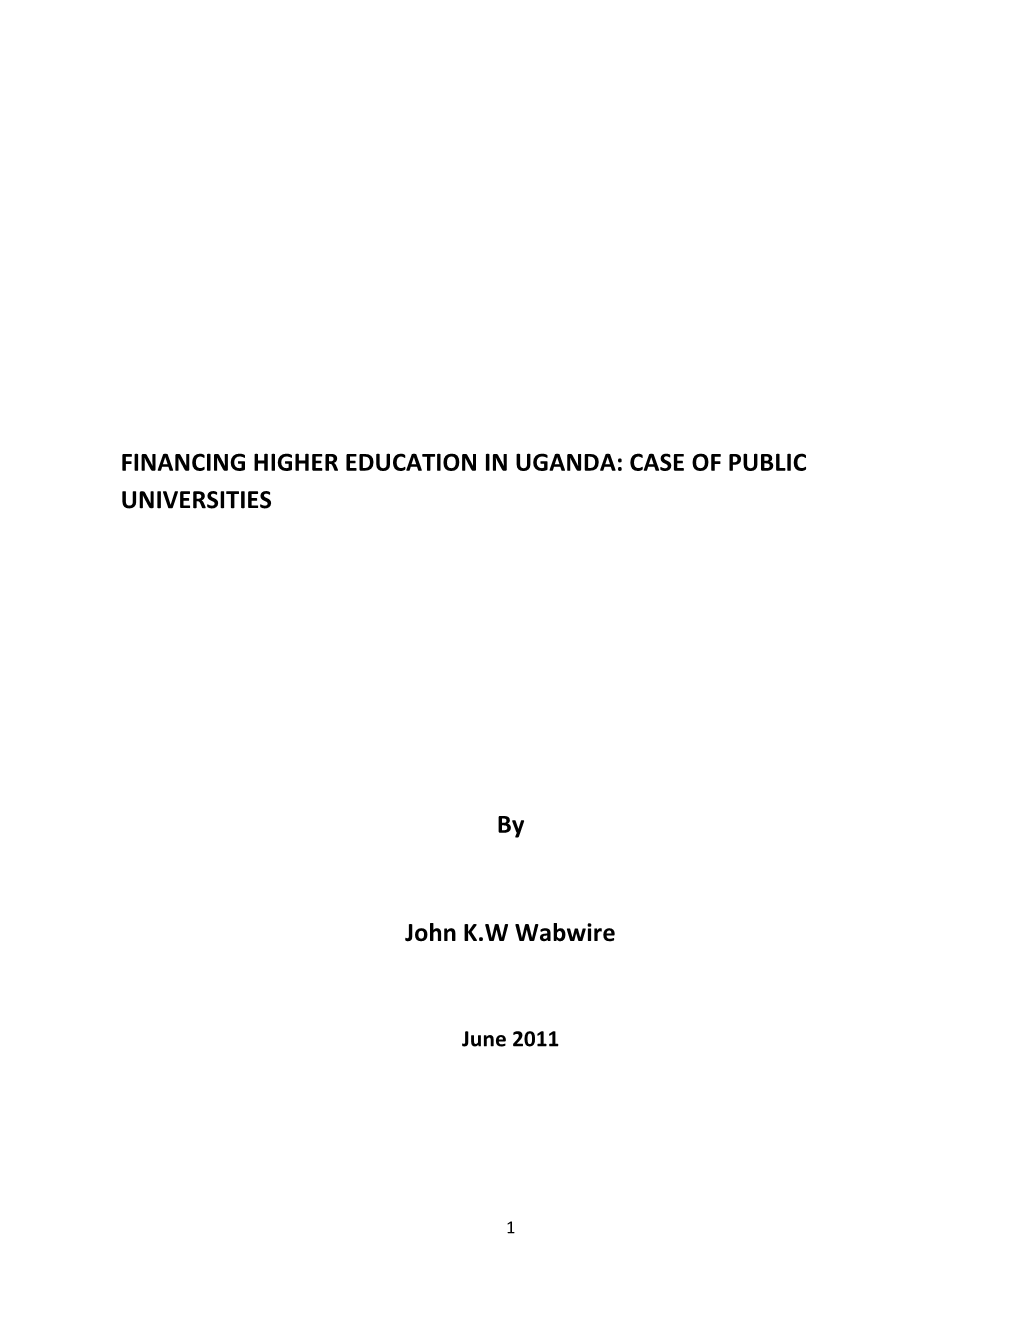 Financing Higher Education in Uganda: Case of Public Universities